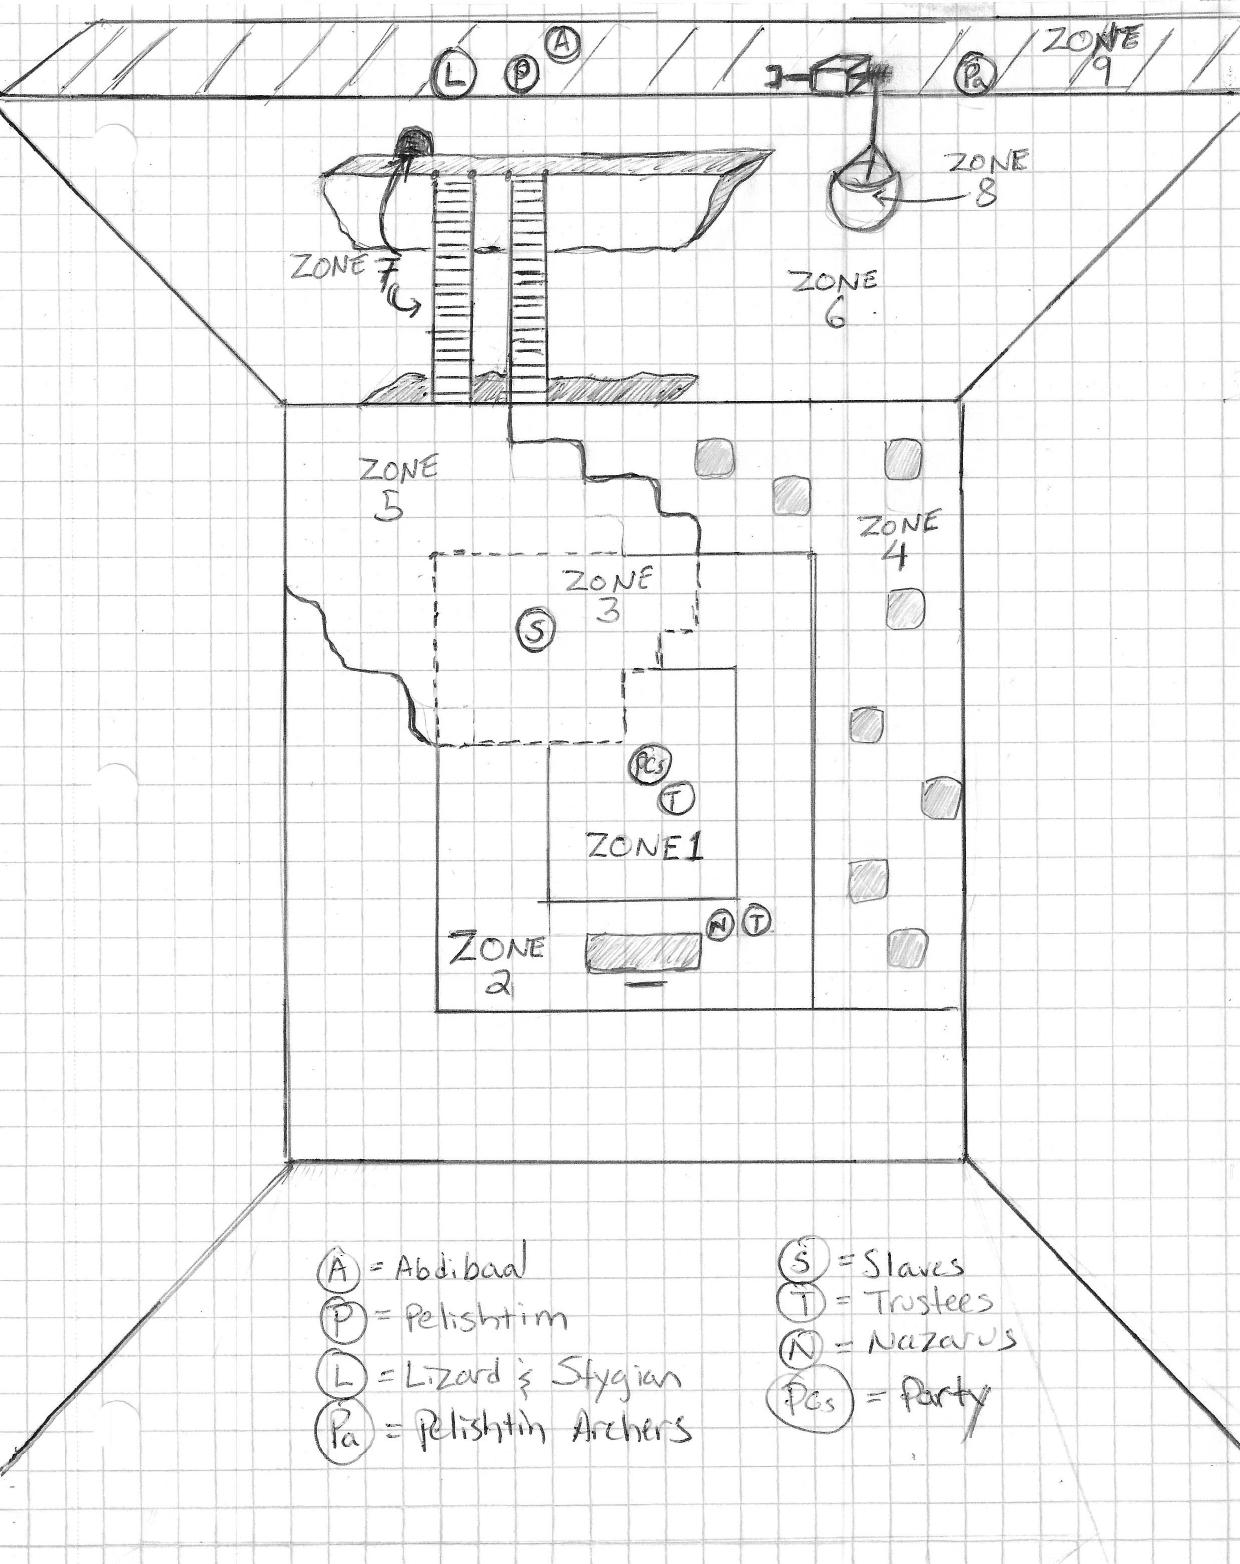 Conan Modiphius Playtest Kit v1.1 Playtest Adventure The Red Pit Demo Map v4